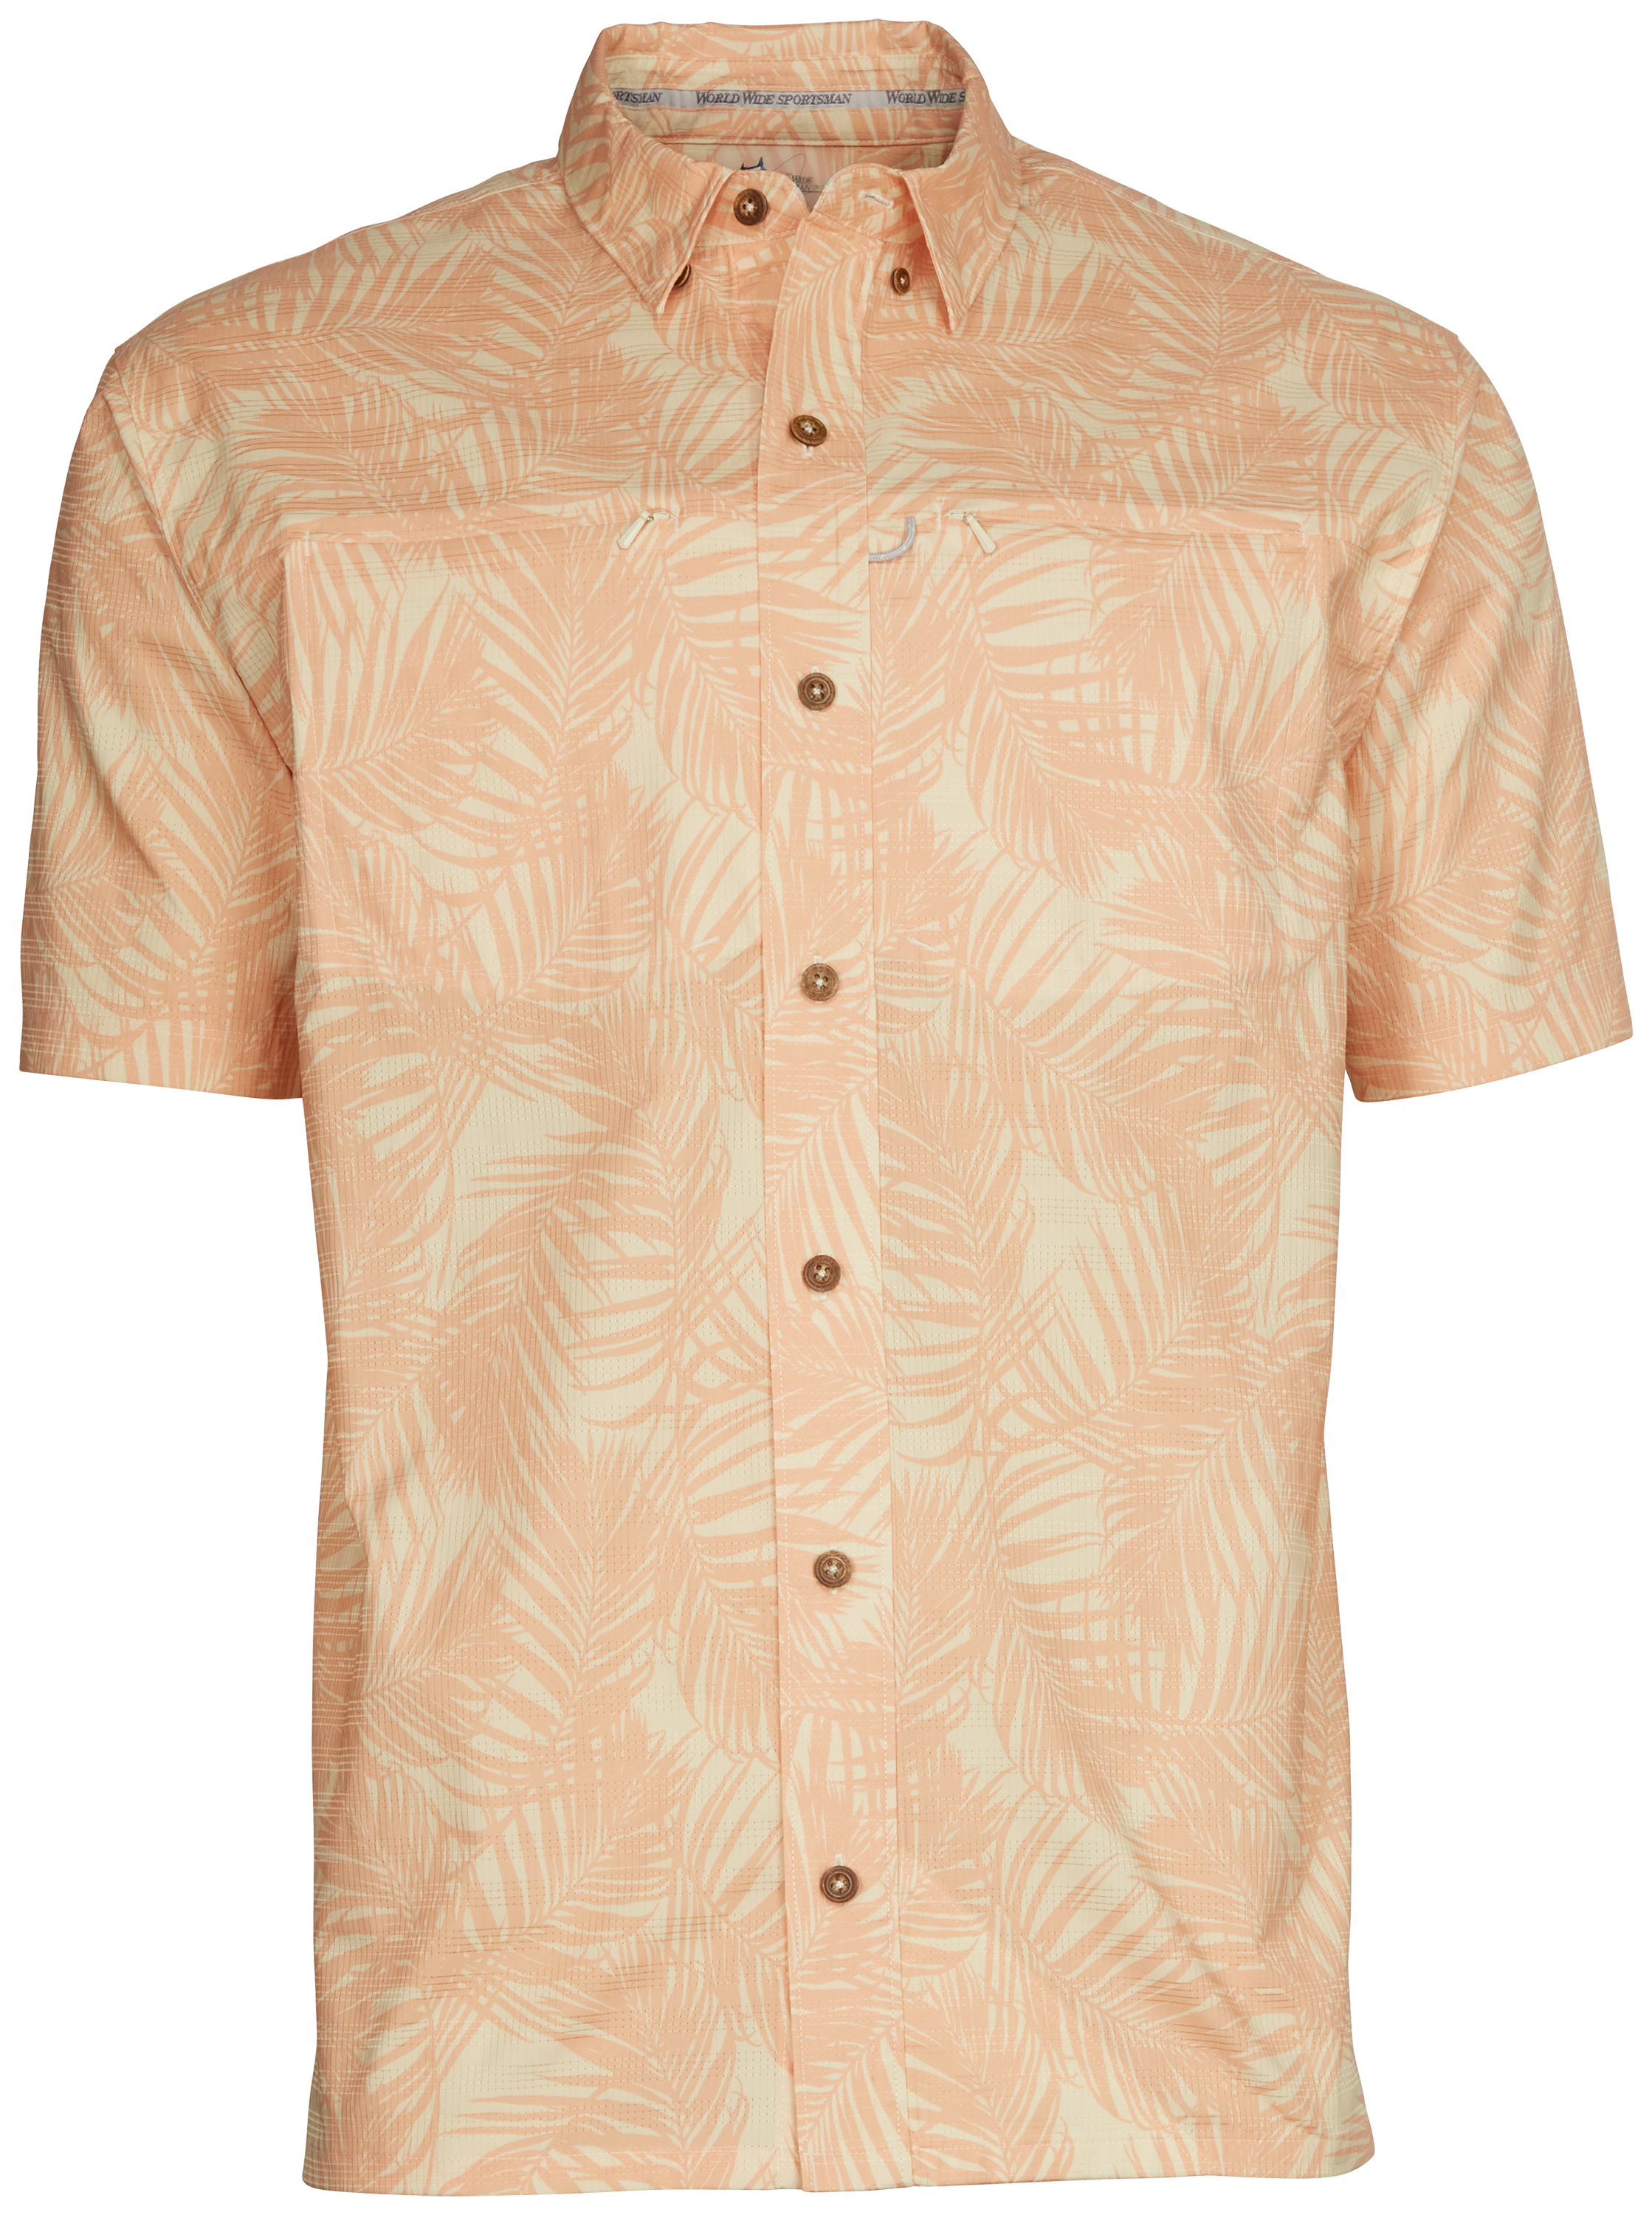 World Wide Sportsman Seacrest Print Short-Sleeve Button-Down Shirt for Men - Apricot Palms - 2XL